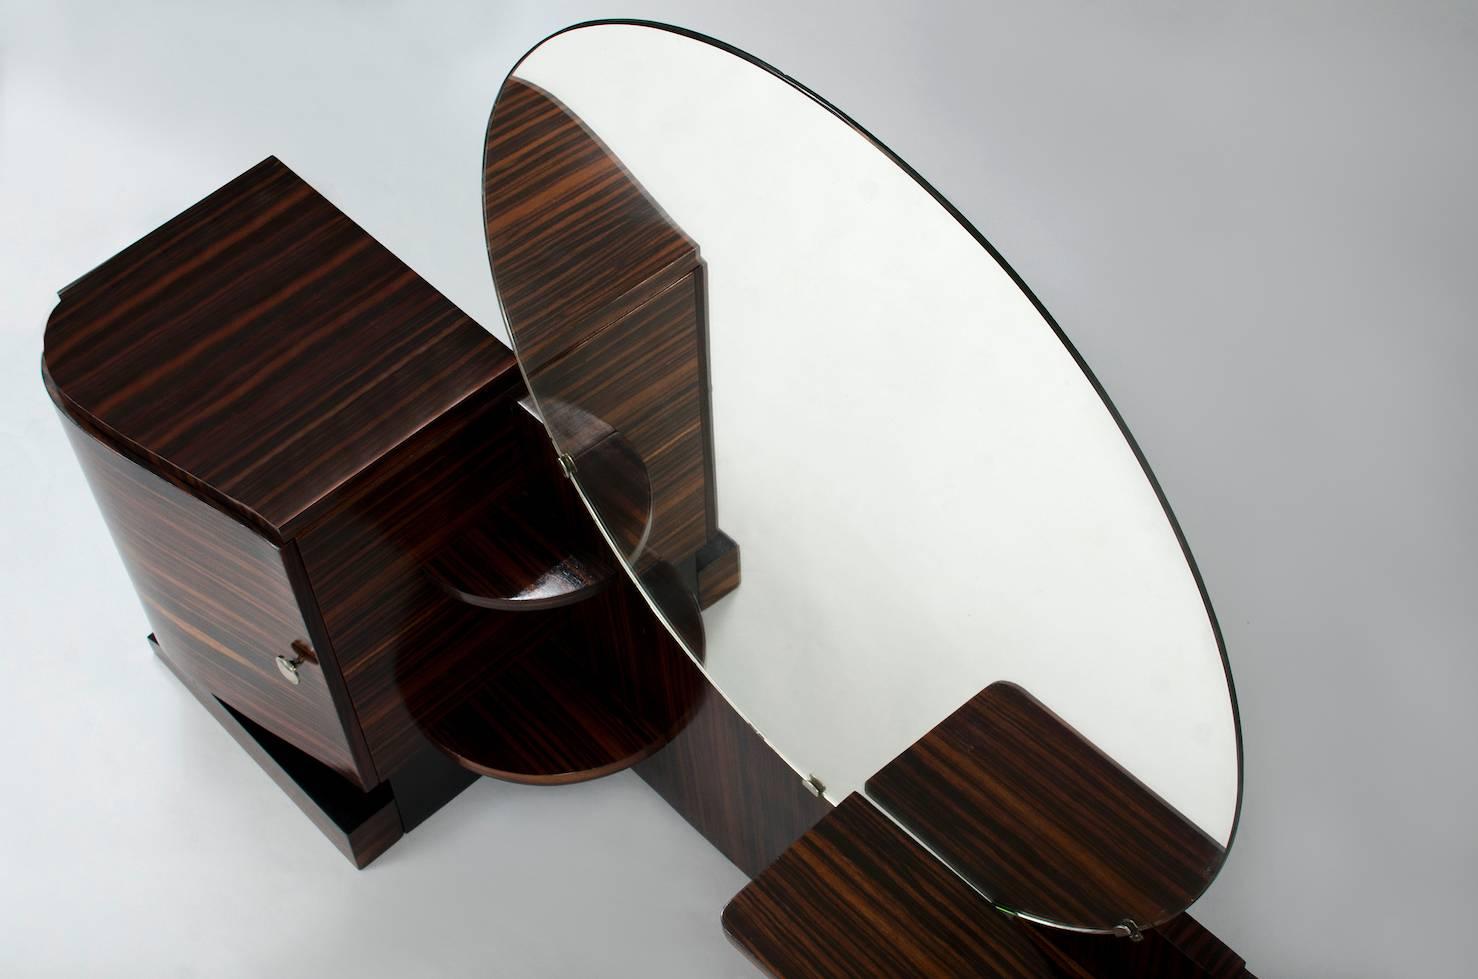 Art Deco Macassar ebony vanity with large round mirror (35.4 in, 0.90 m diameter).